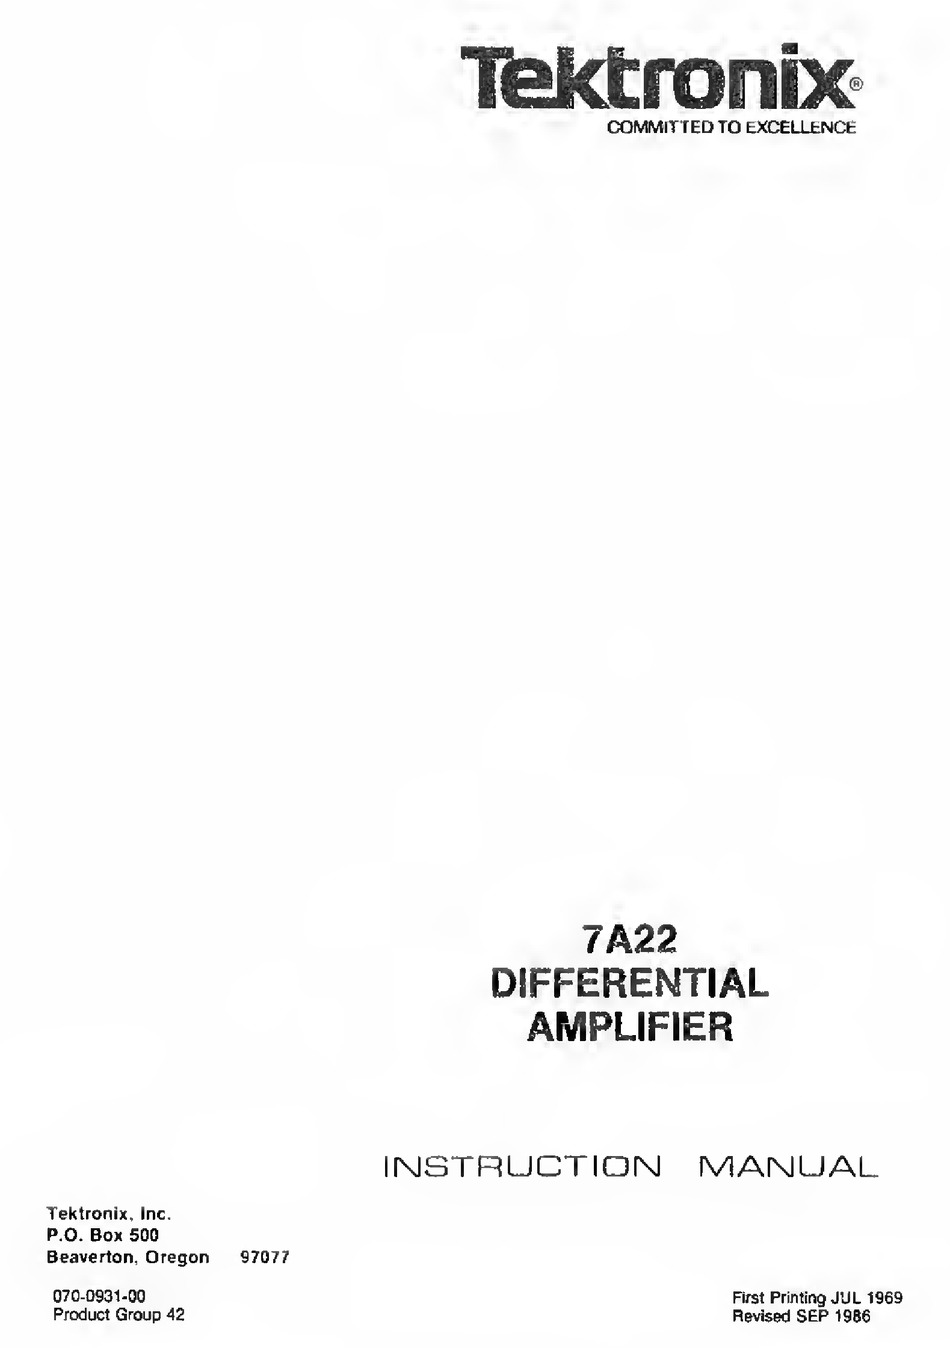 Original Tektronix Instruction Manual for the 7A22 Diff amp plugin